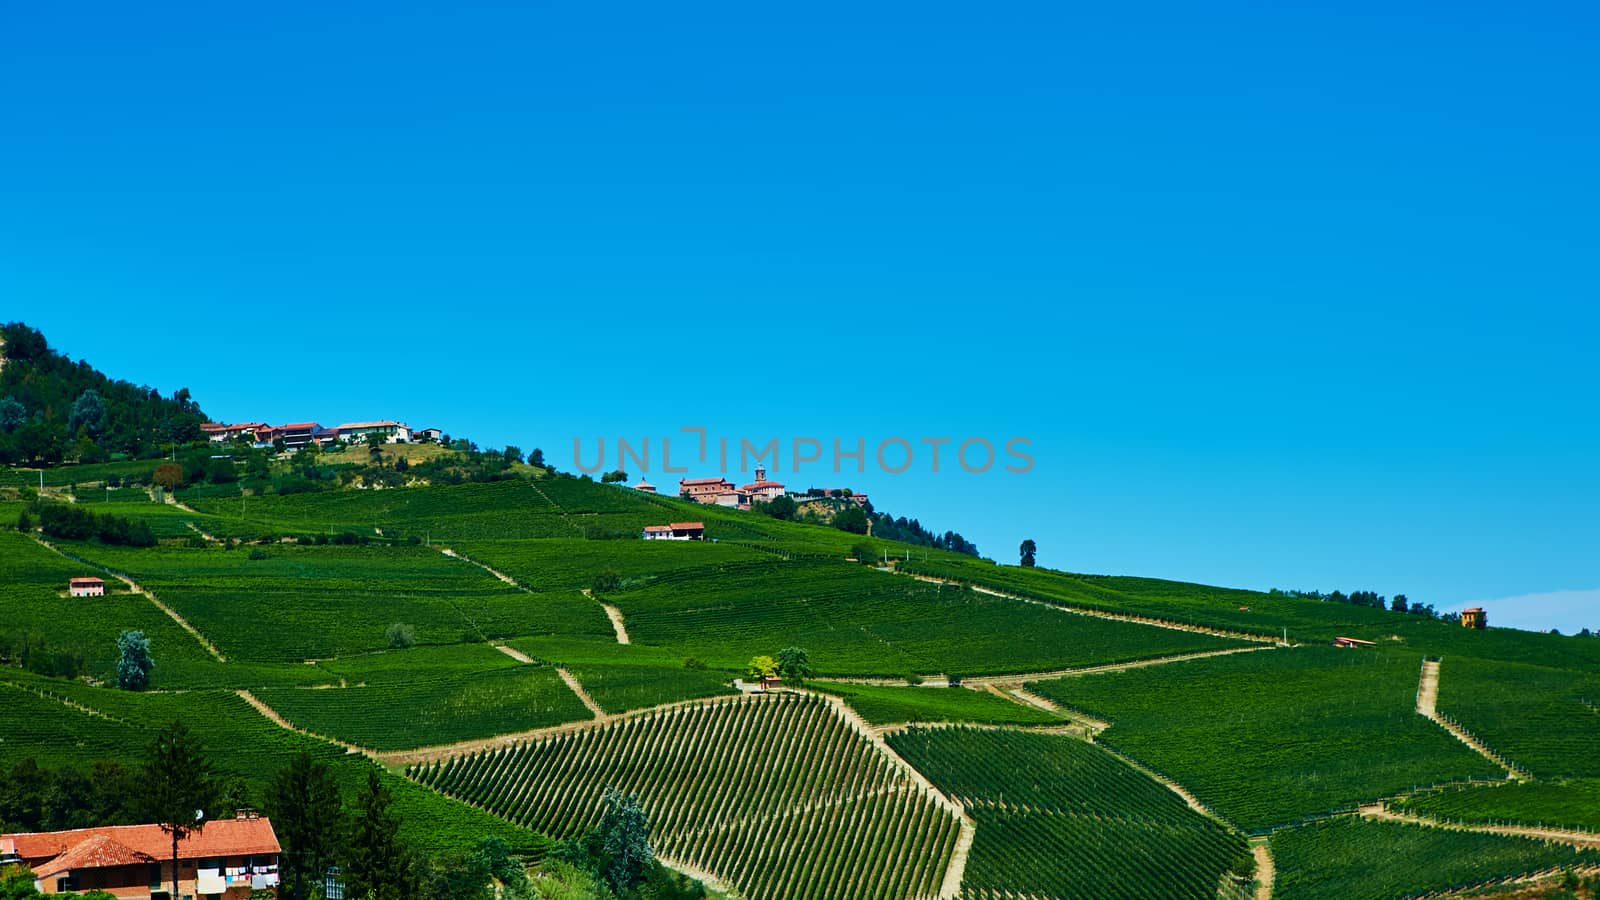 The chianti vineyard landscape in Tuscany, Italy